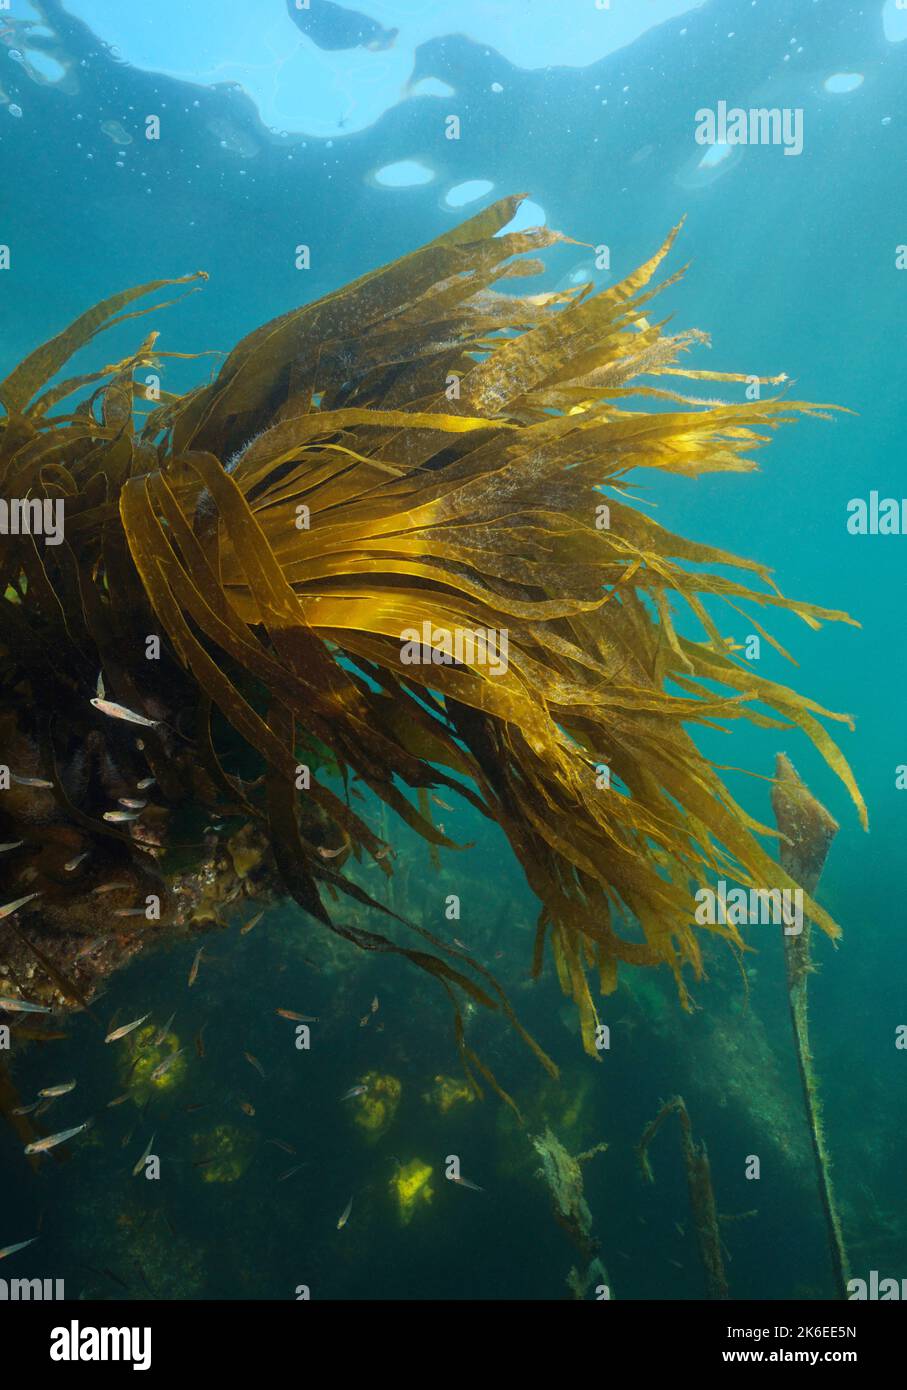 Laminaria kelp foglie di alghe marine, alghe brune sott'acqua nell'oceano, Atlantico orientale, Spagna, Galizia Foto Stock